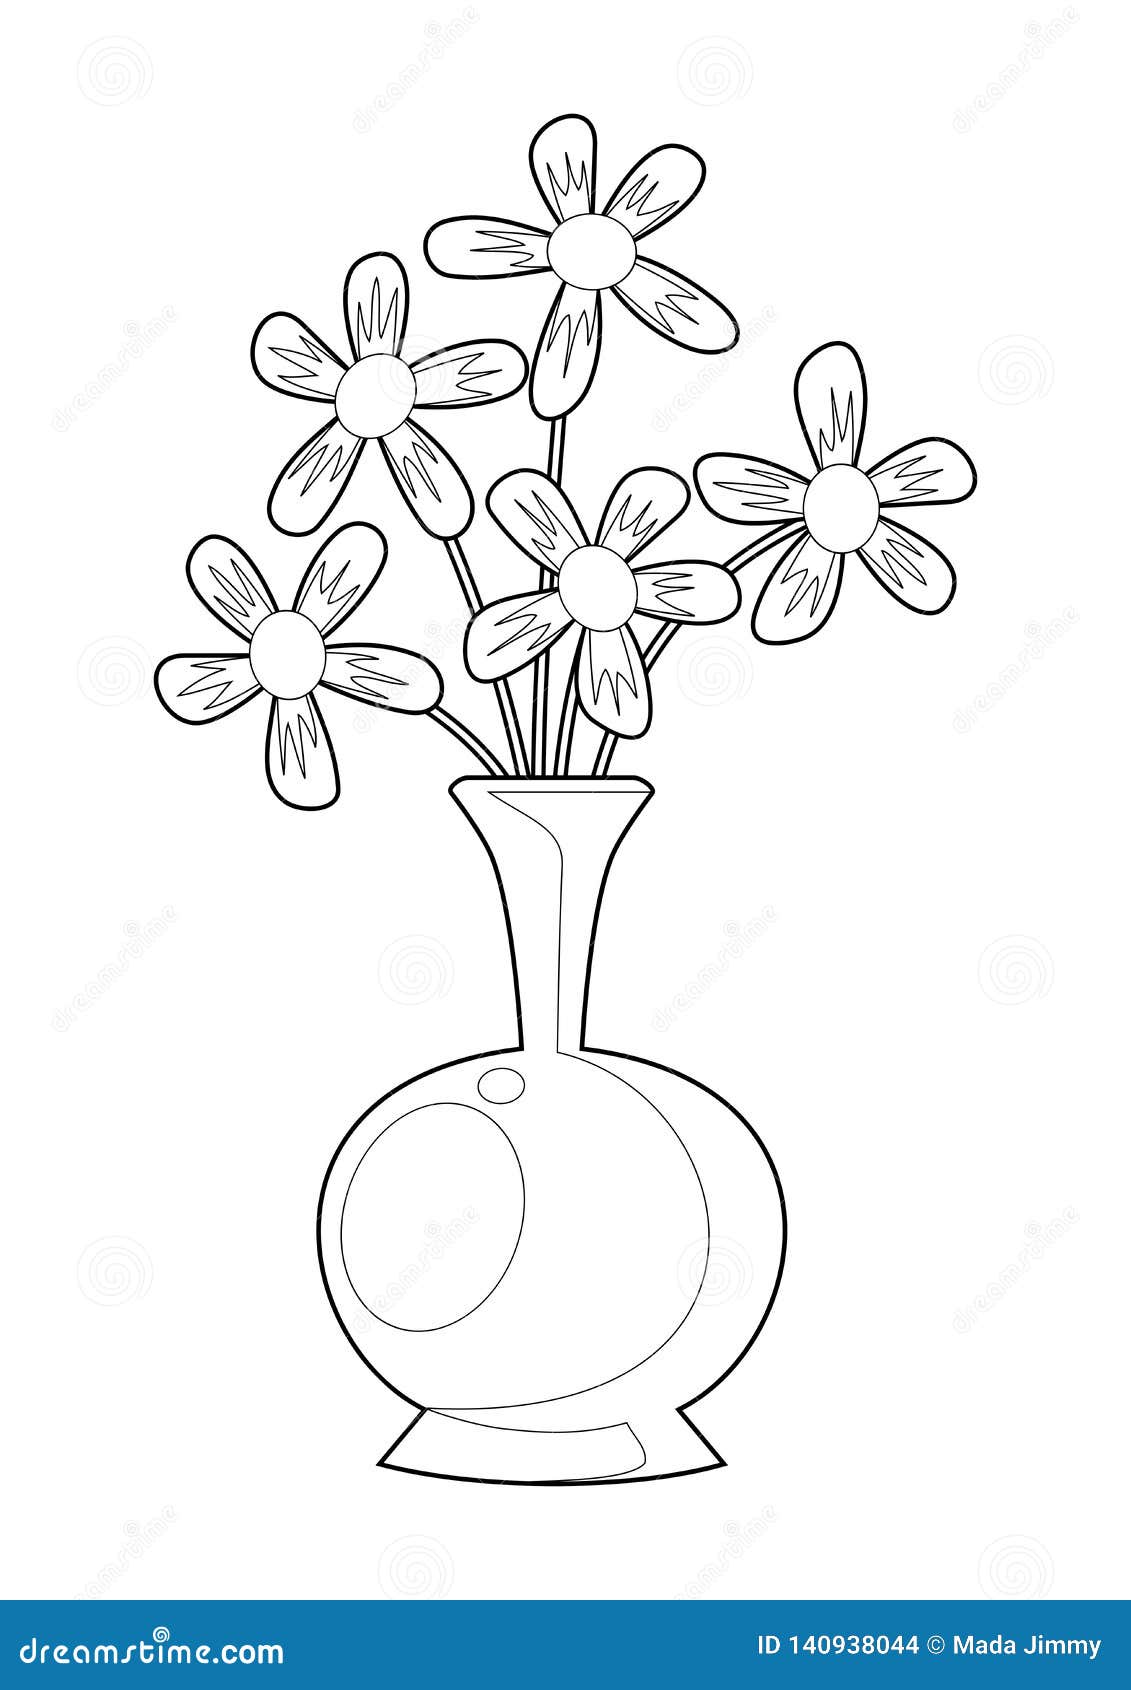 15,095 Flower Vase Sketch Images, Stock Photos & Vectors | Shutterstock